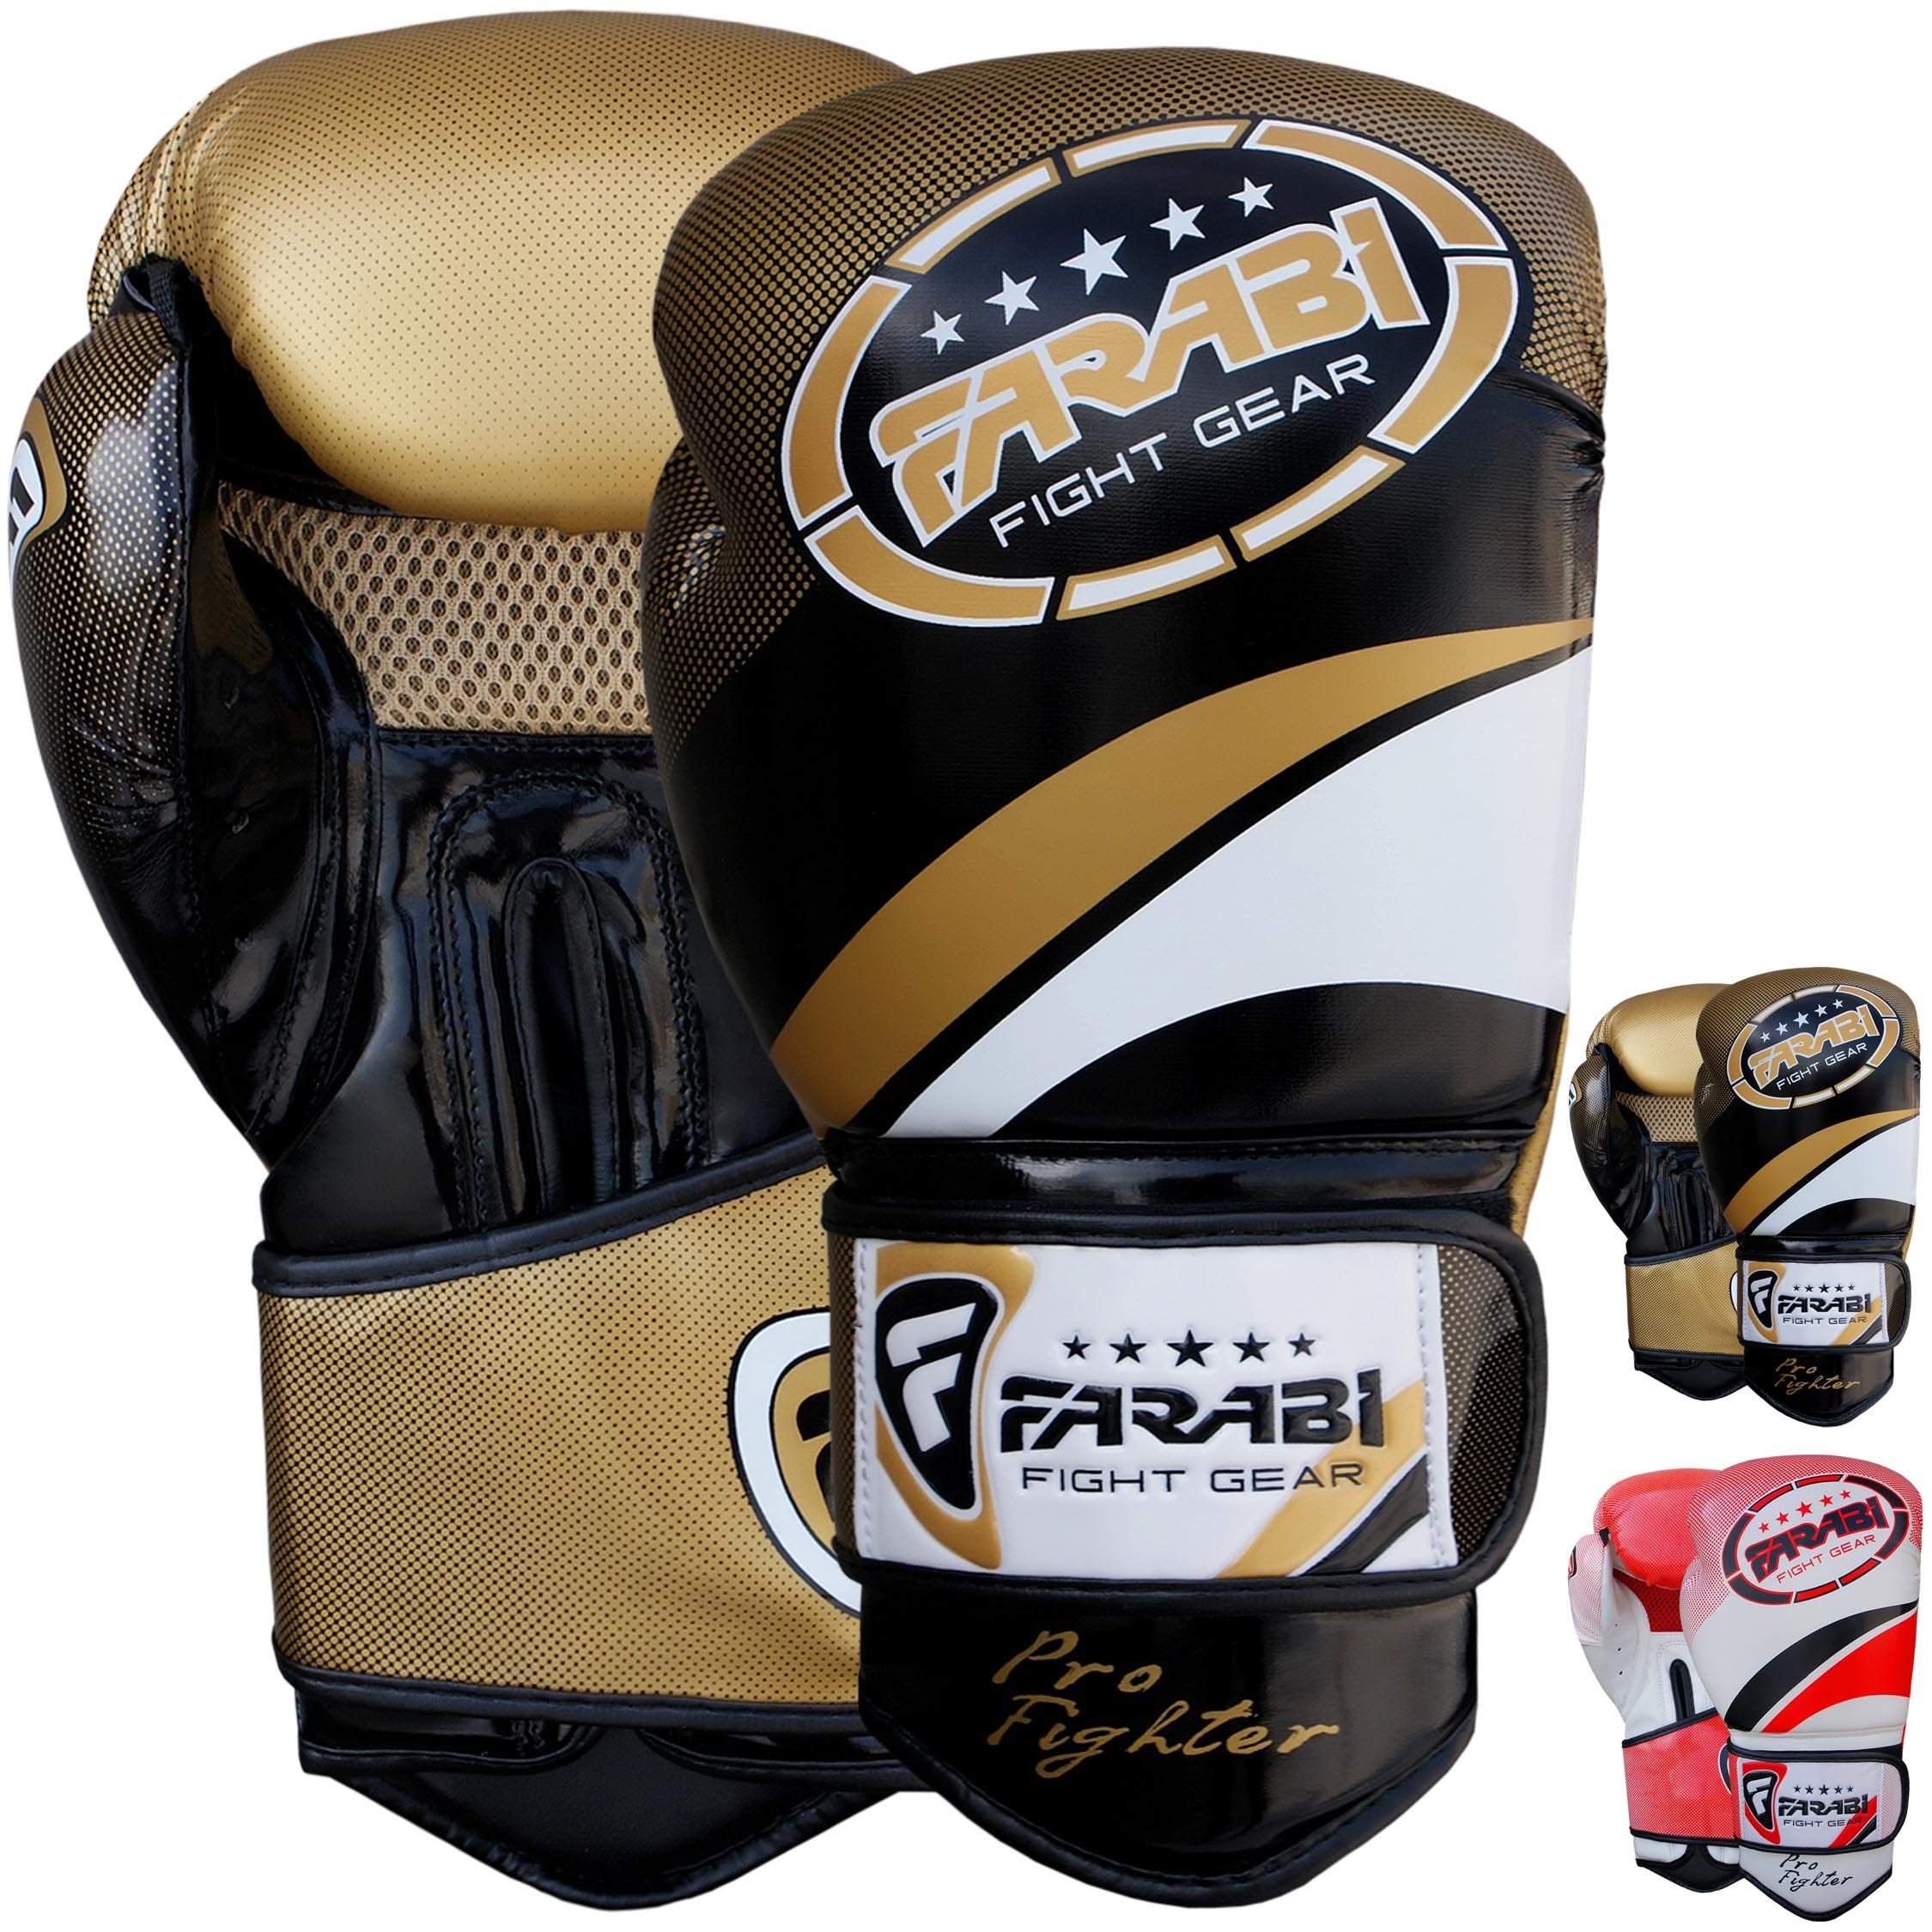 Farabi Boxing Gloves for Training Punching Sparring (Black/Gold, 10-oz)